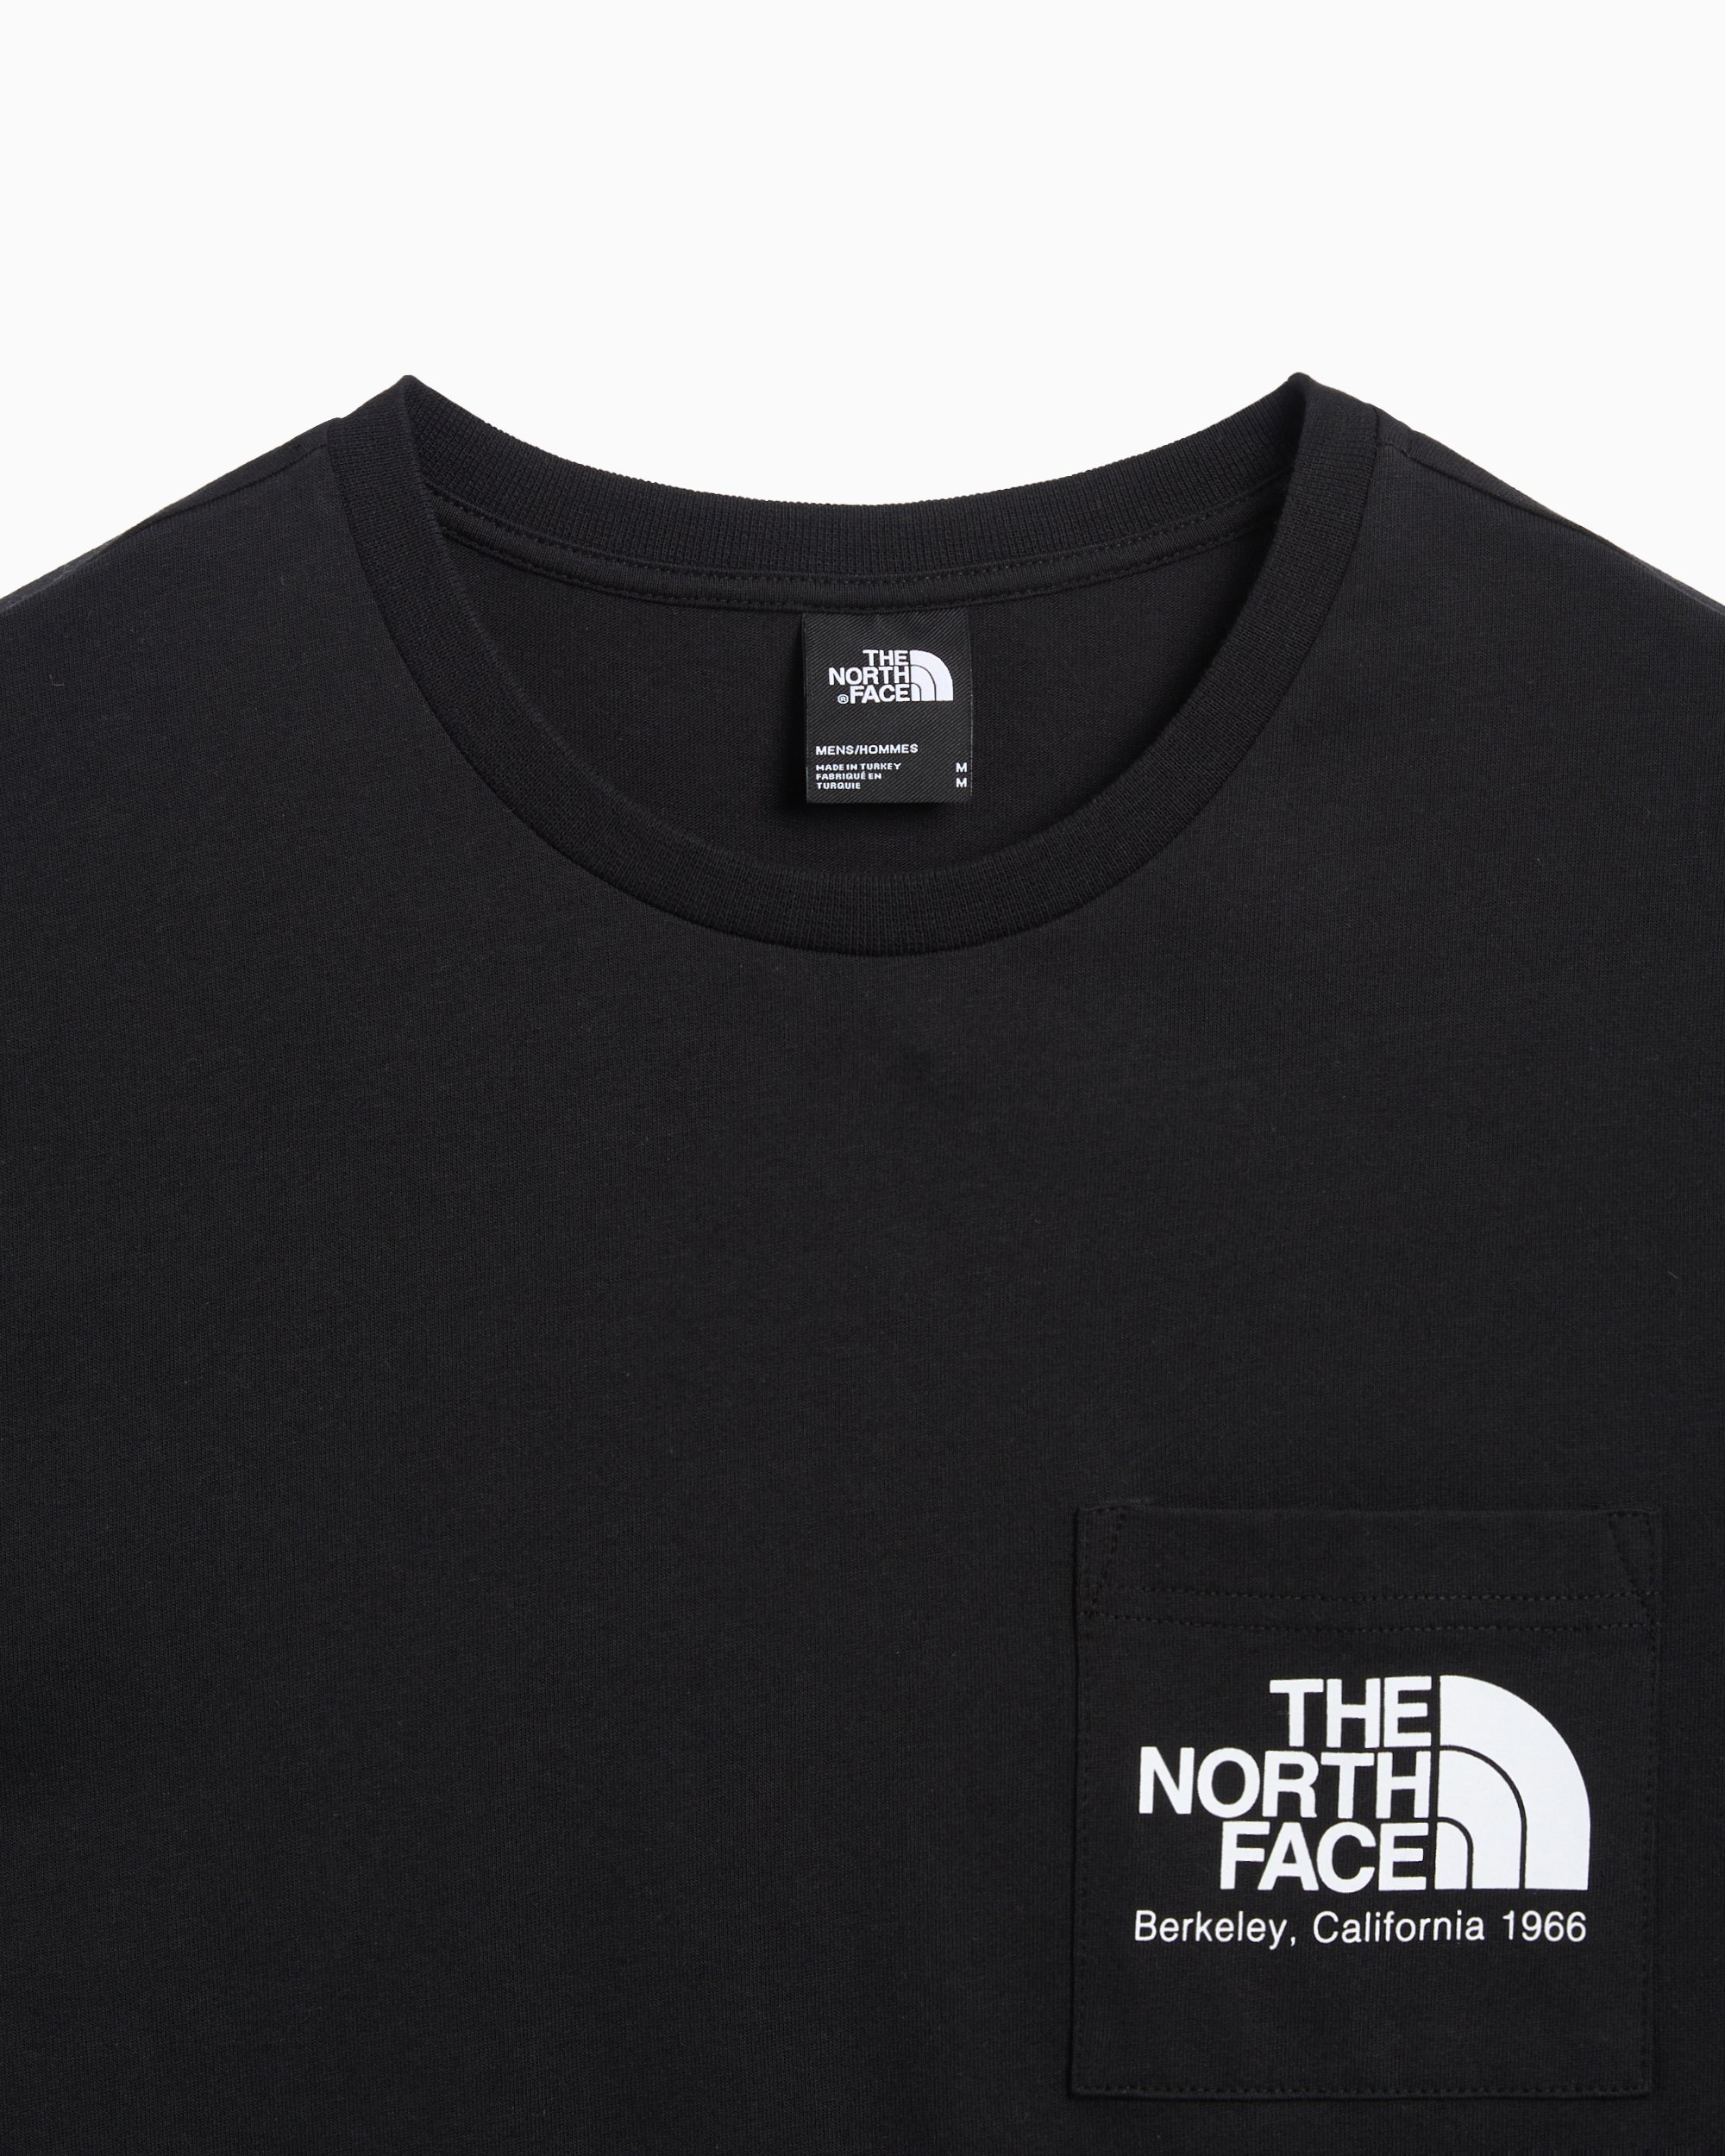 The North Face Berkeley California Men's Pocket T-Shirt Black